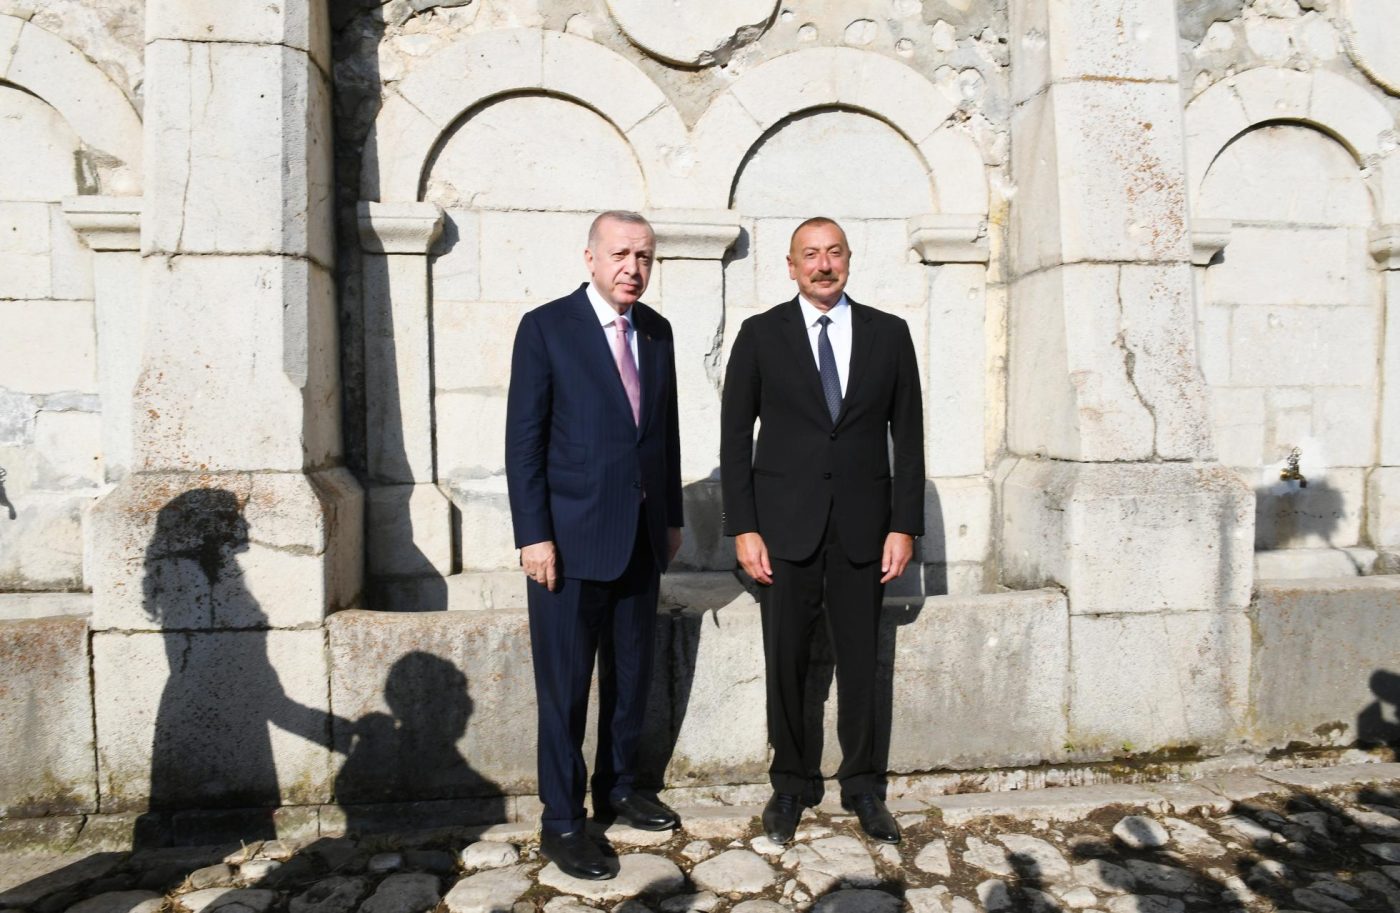 Photo: Presidents of Azerbaijan and Turkey visited "Khan gizi" spring in Shusha. Credit: President of Azerbaijan